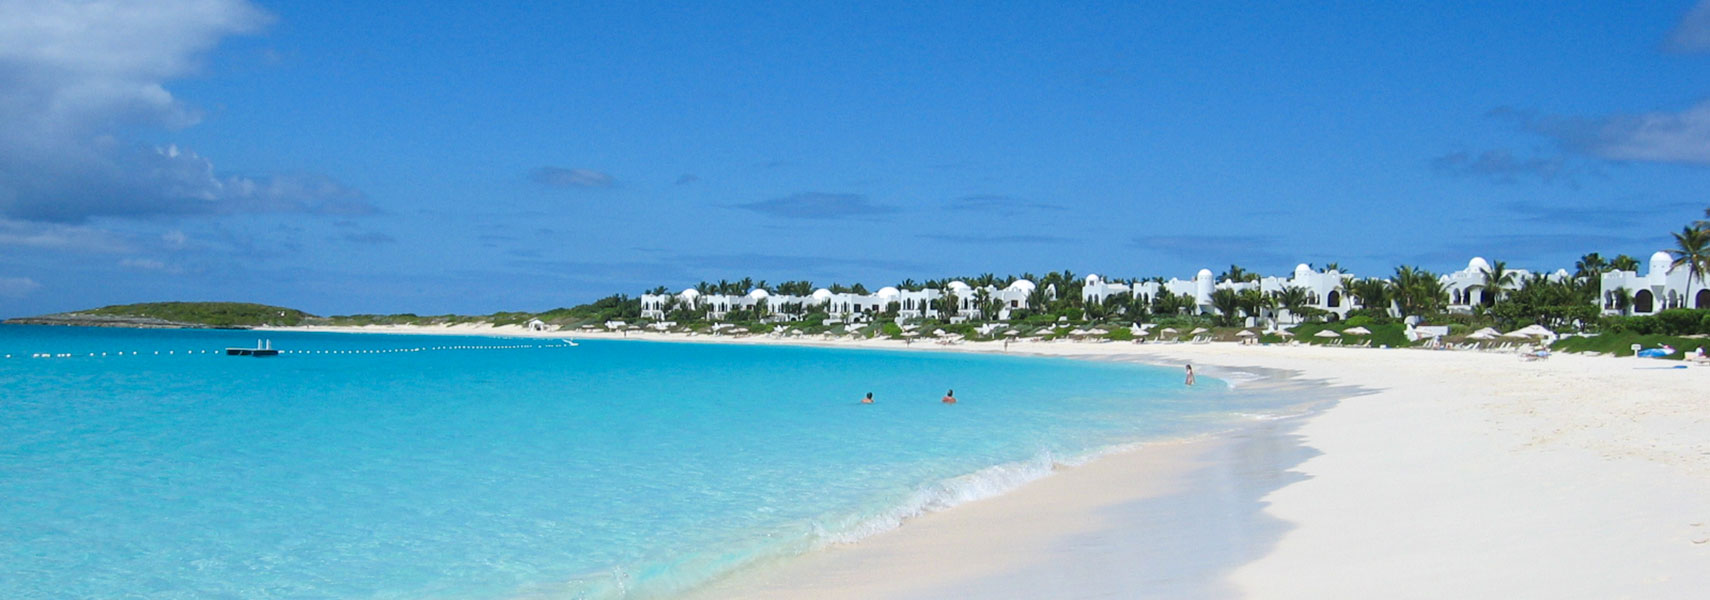 Beach at the Cap Juluca resort on Maundays Bay, Anguilla